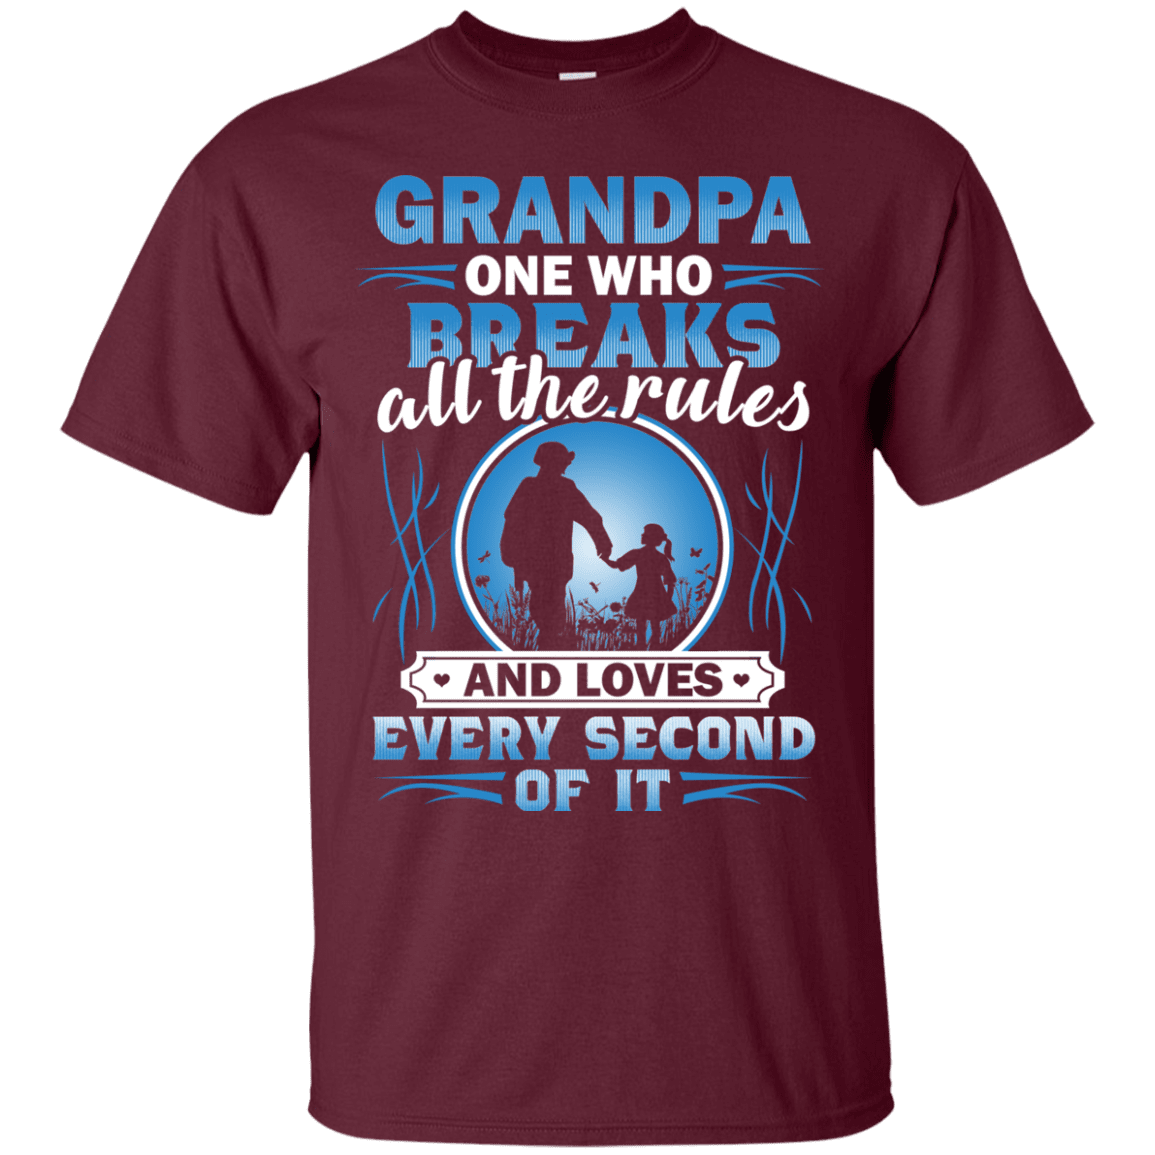 Military T-Shirt "GRANDPA ONE WHO BREAKS ALL THE RULES"-TShirt-General-Veterans Nation